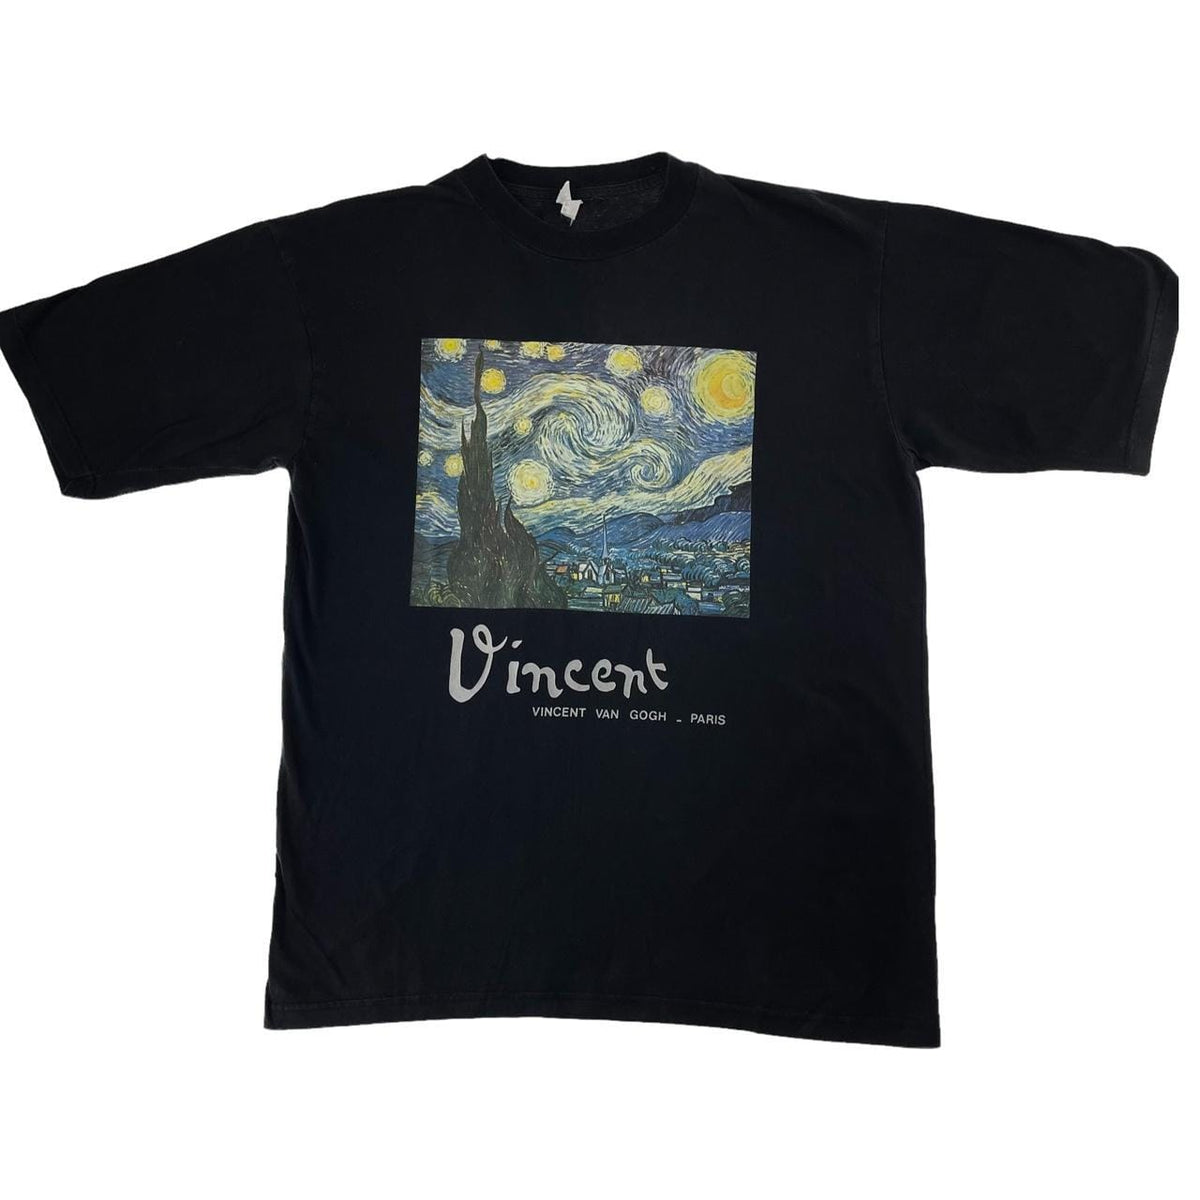 Vintage Van Gogh starry night art t shirt size L